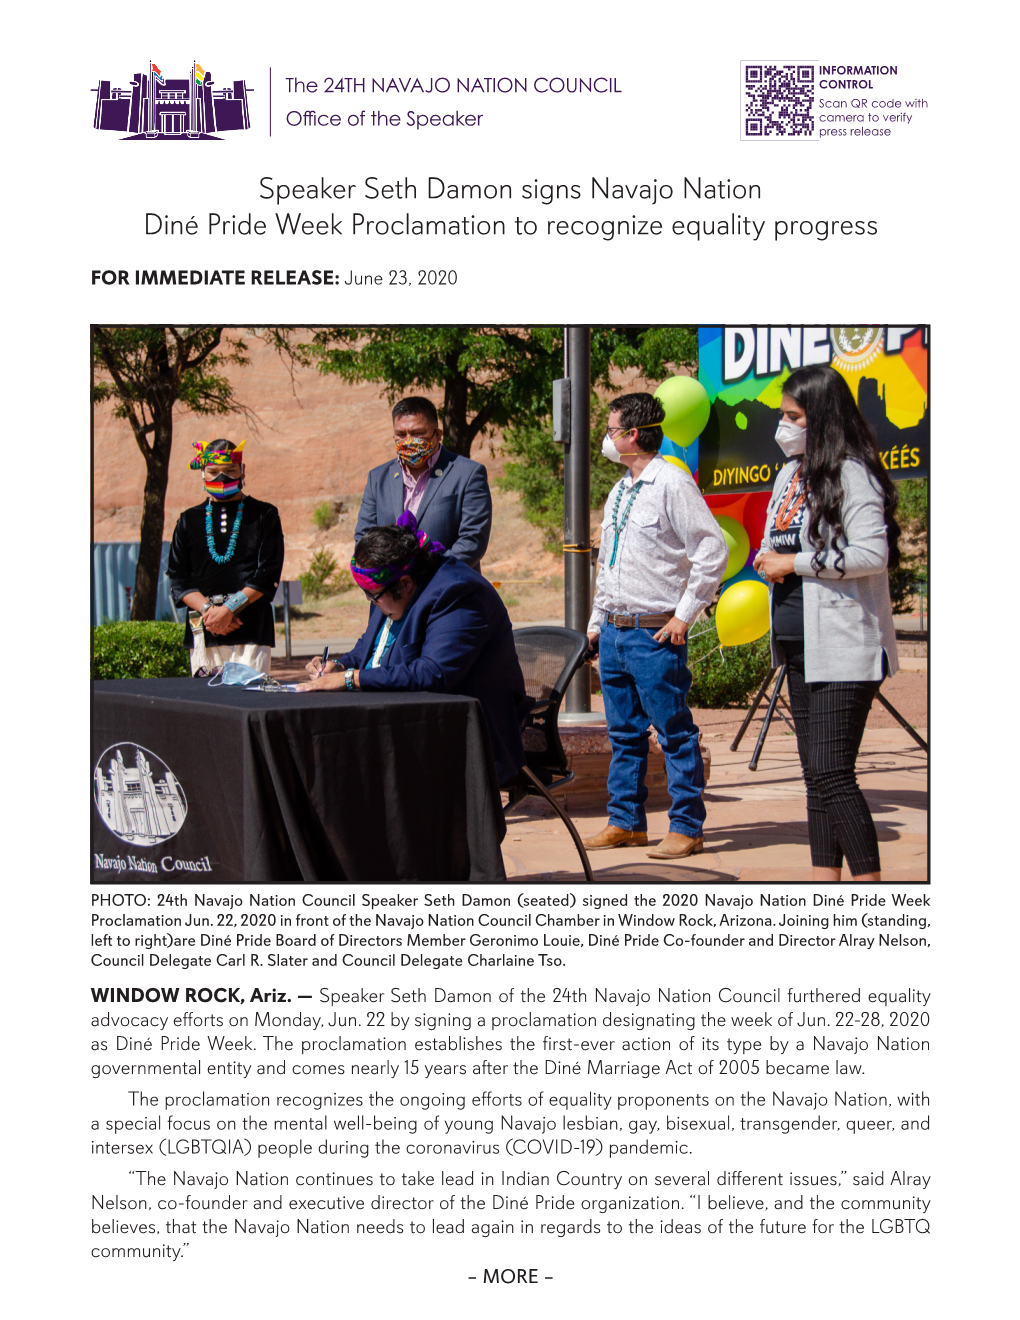 Speaker Seth Damon Signs Navajo Nation Diné Pride Week Proclamation to Recognize Equality Progress